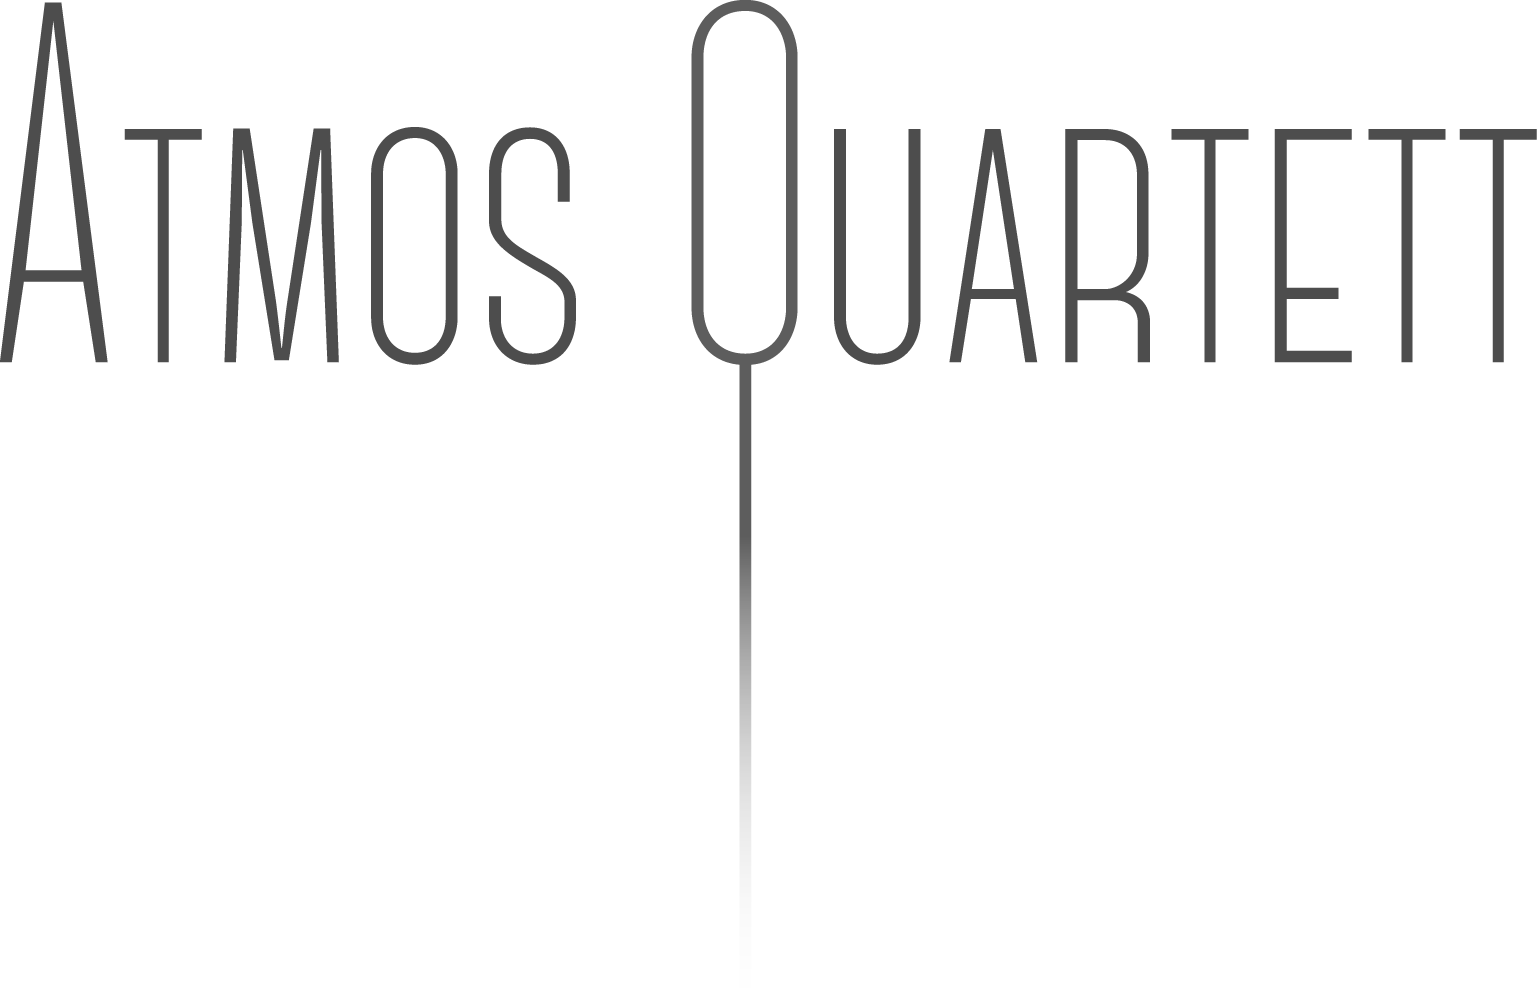 AtmosQuartett Logo